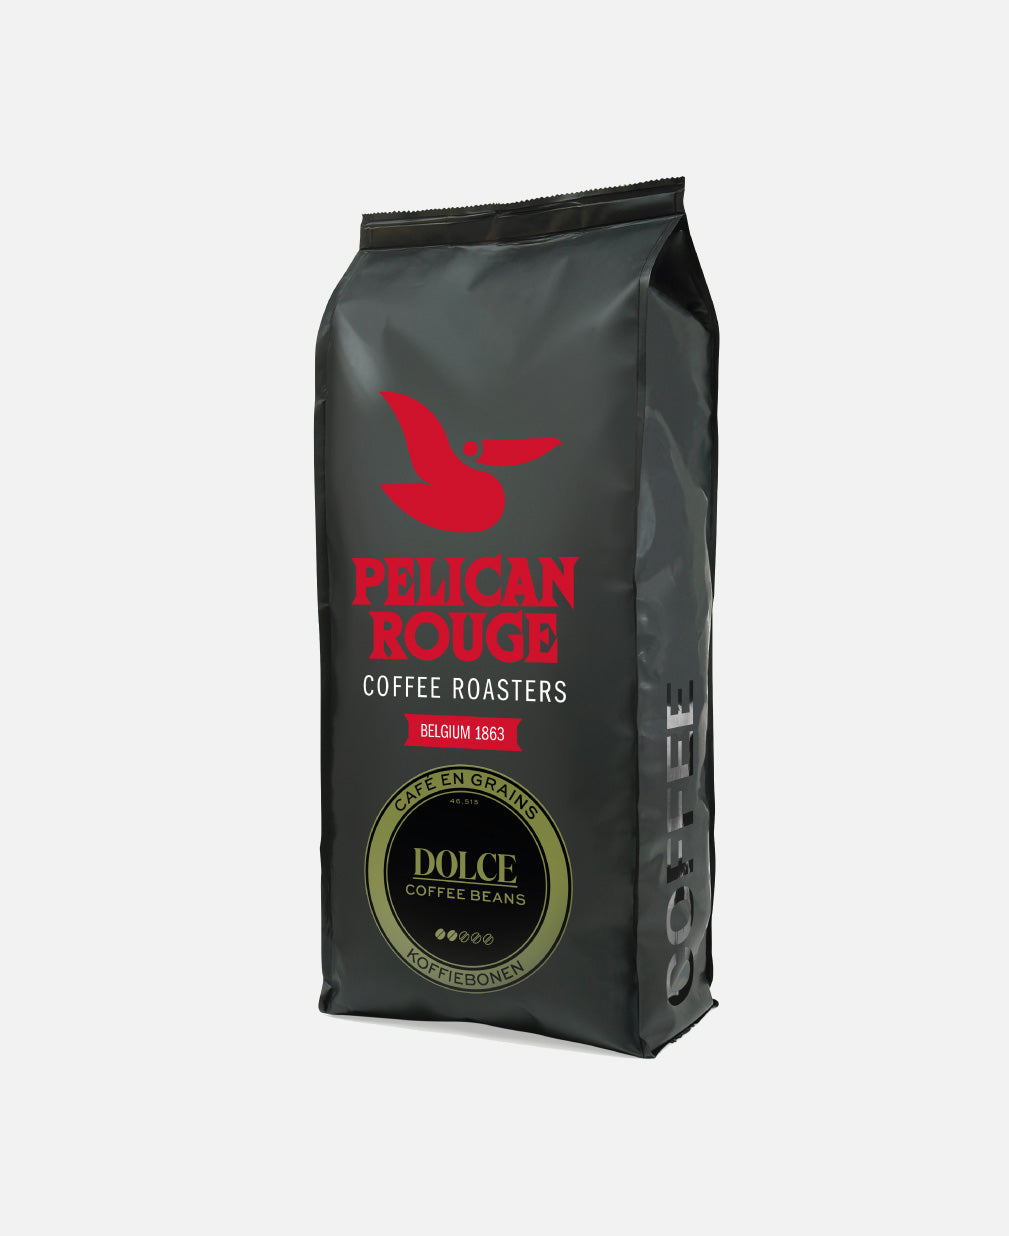 Pelican Rouge kavos pupelės automatiniams kavos aparatas "Pelican Rouge Dolce"